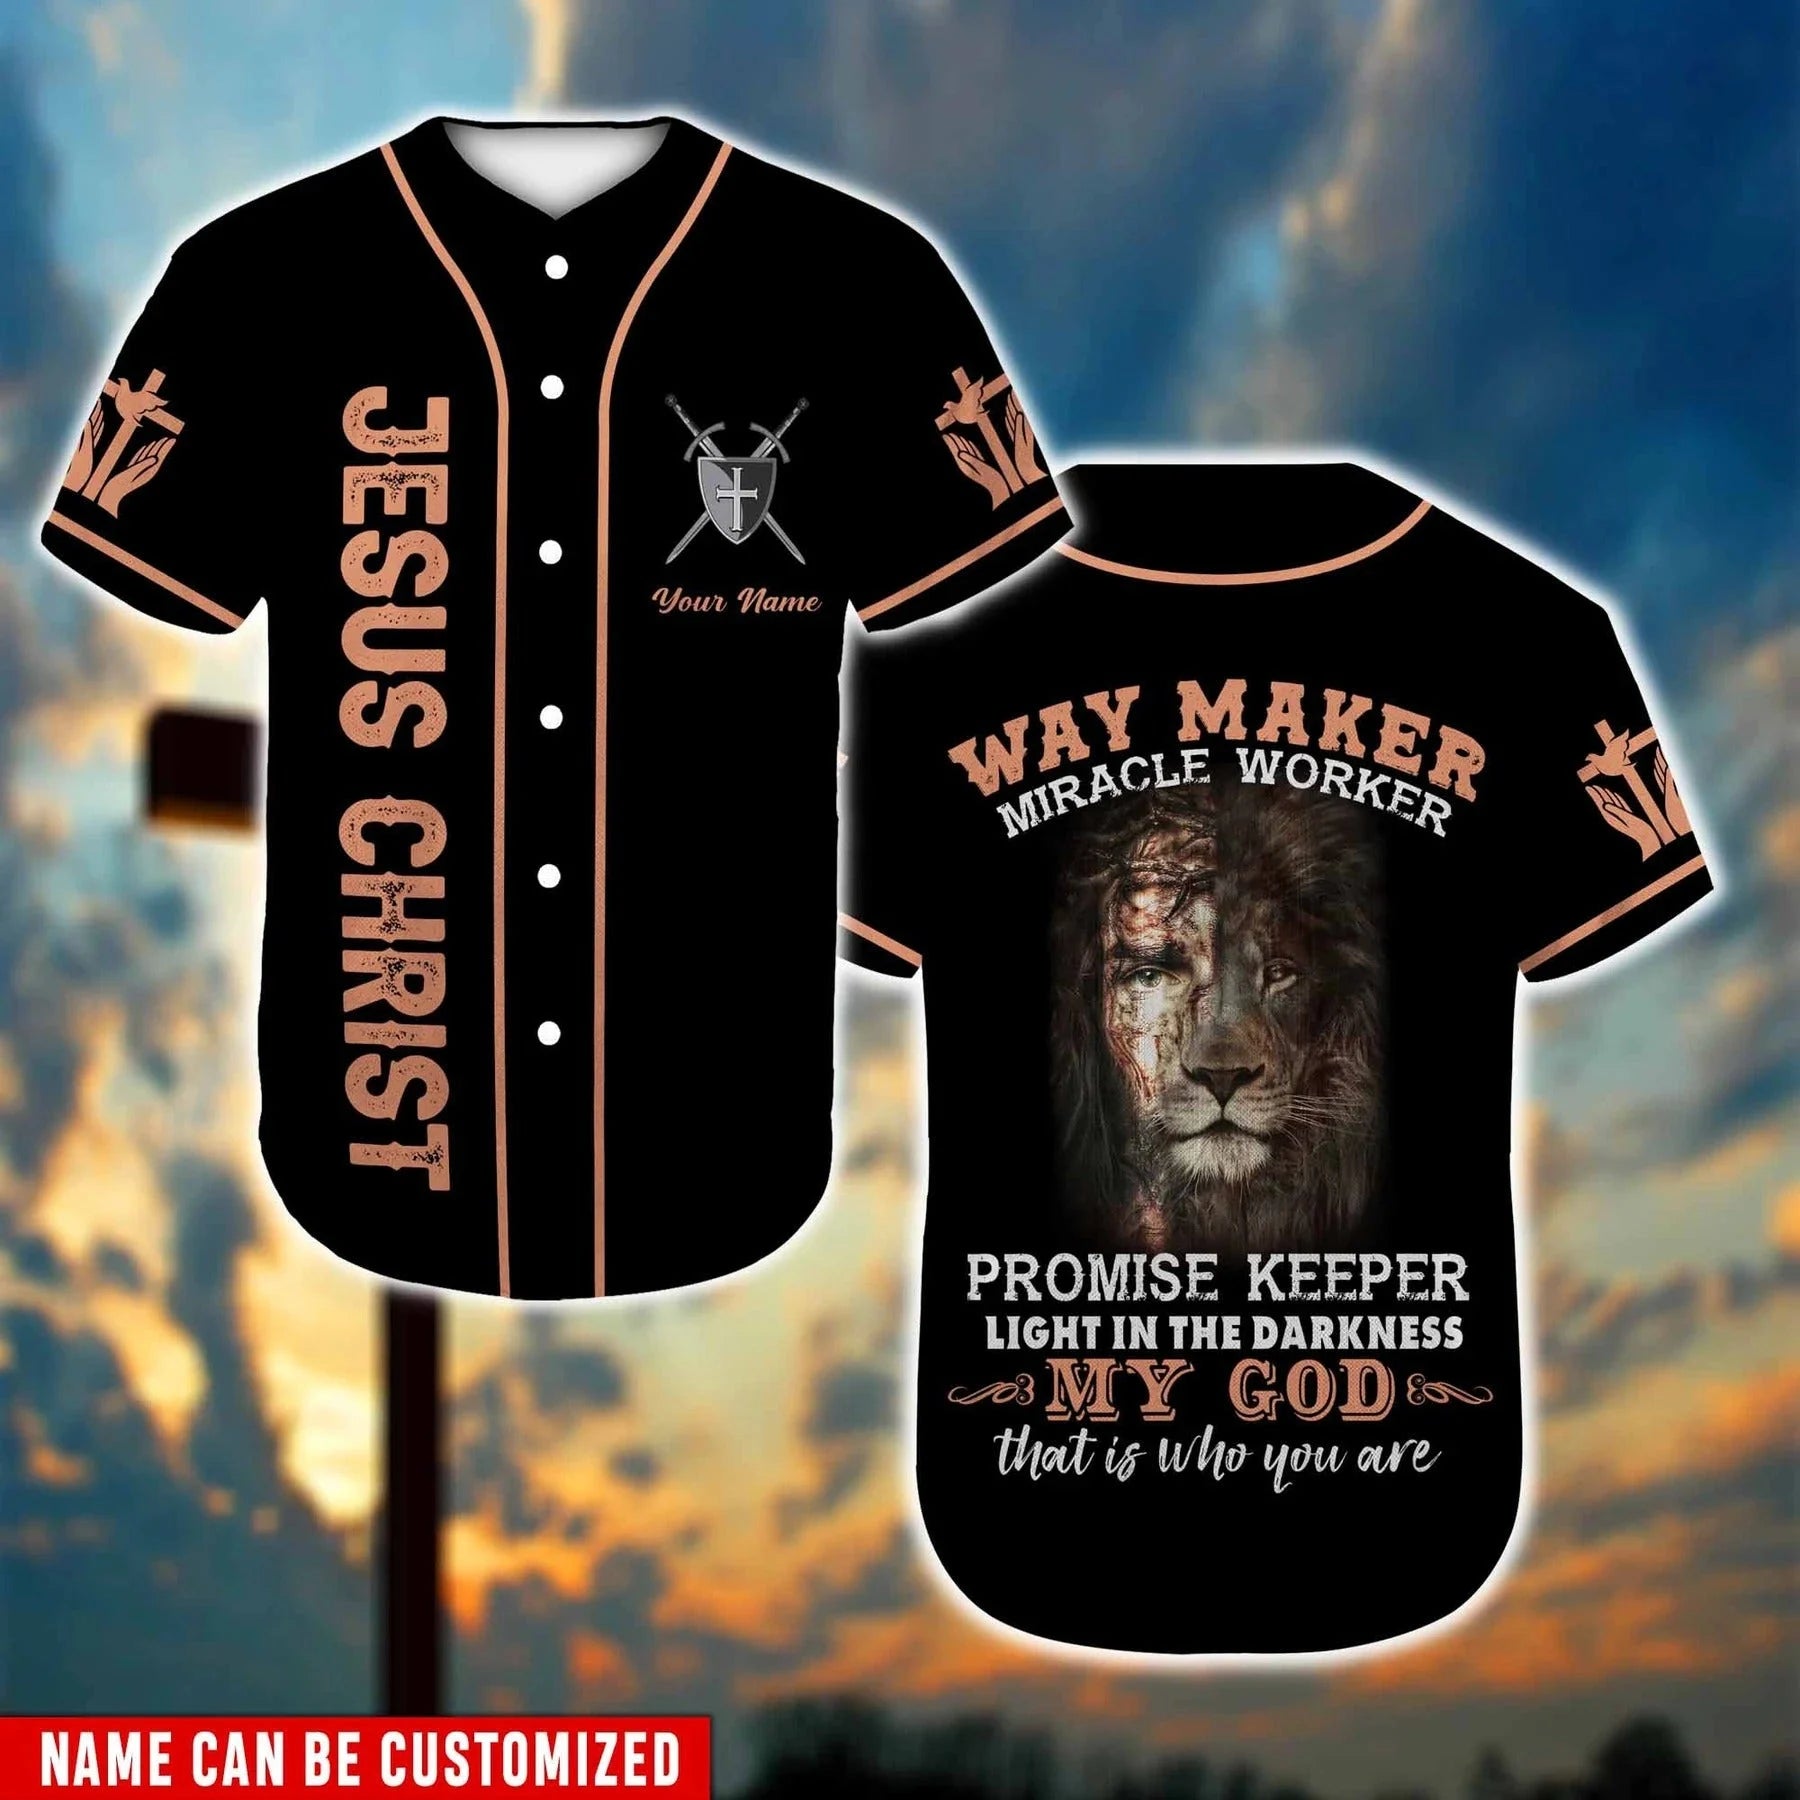 Personalized Jesus Baseball Jersey - Lion Baseball Jersey - Gift For Christians - My God Custom Printed 3D Baseball Jersey Shirt For Men and Women